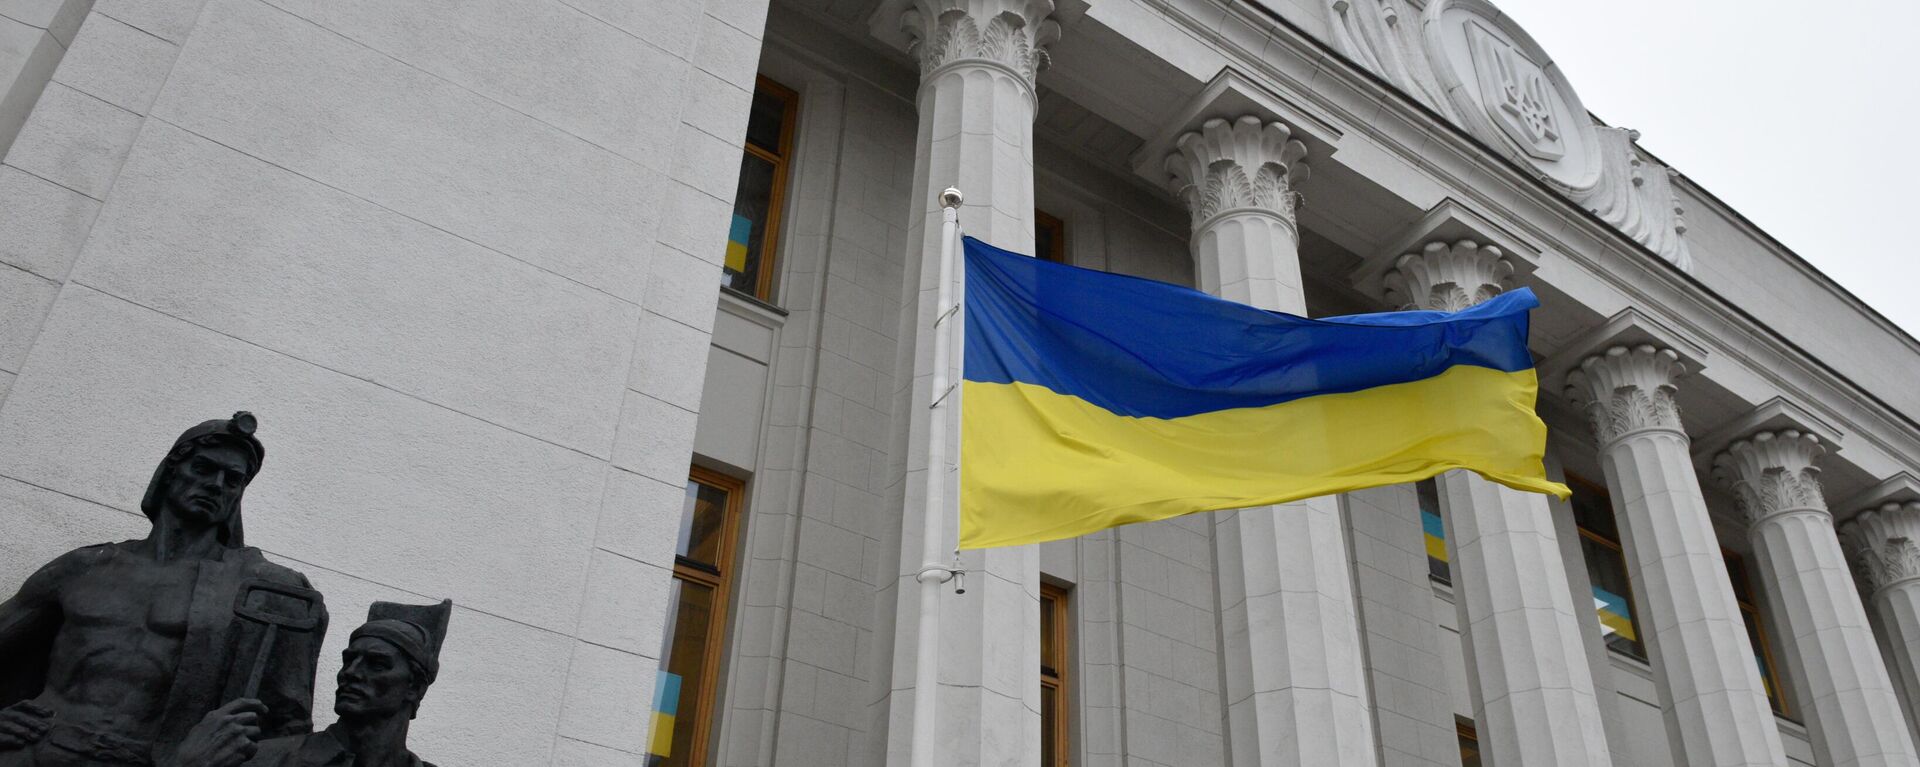 La bandera nacional de Ucrania ondea cerca del edificio de la Rada Suprema  - Sputnik Mundo, 1920, 05.09.2022